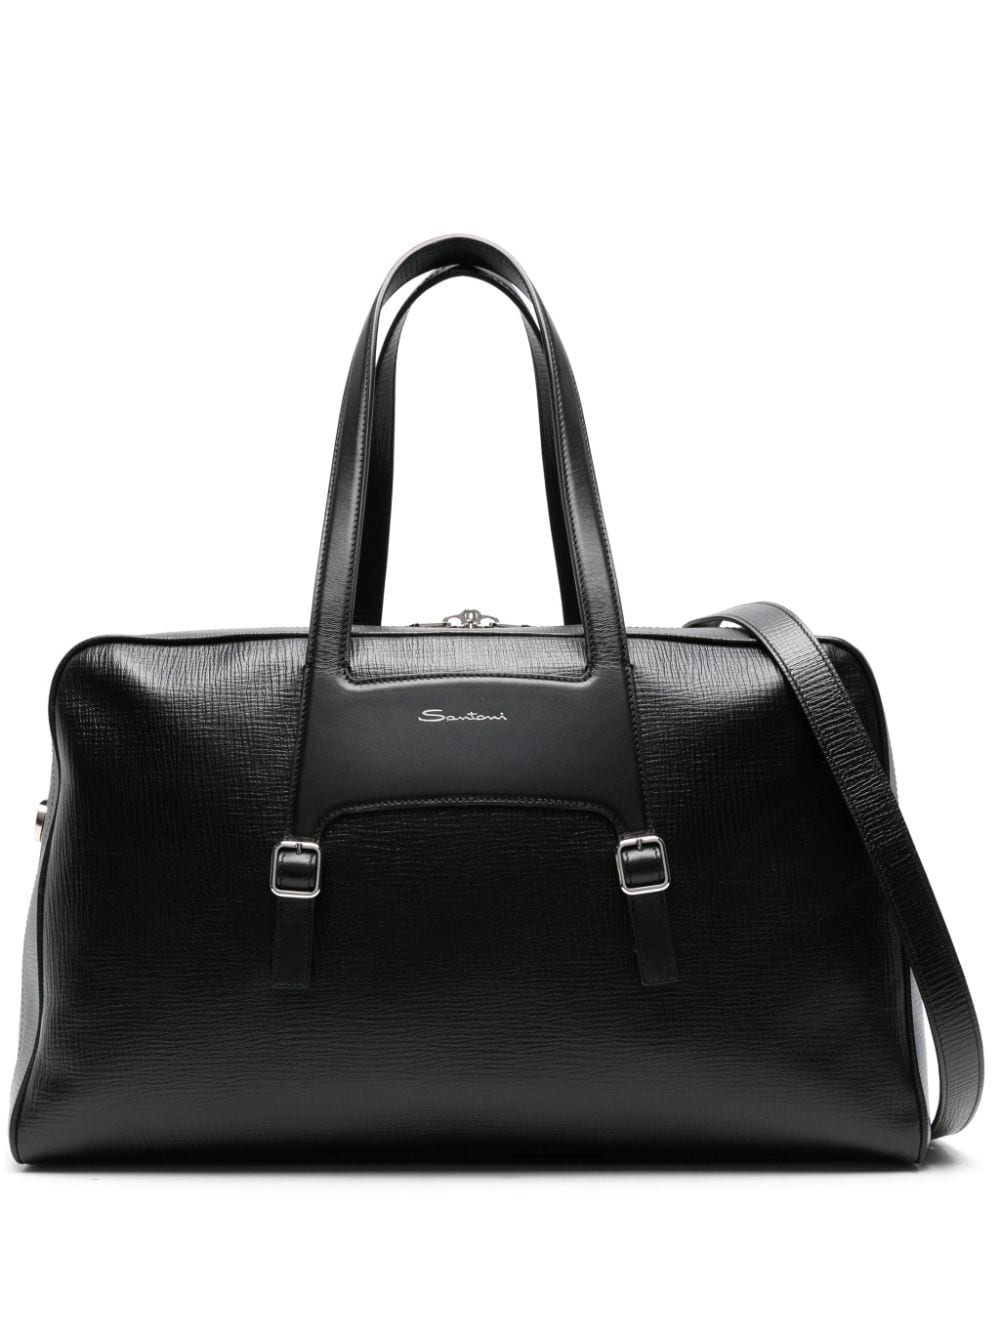 Santoni zip-up leather luggage bag - Black von Santoni